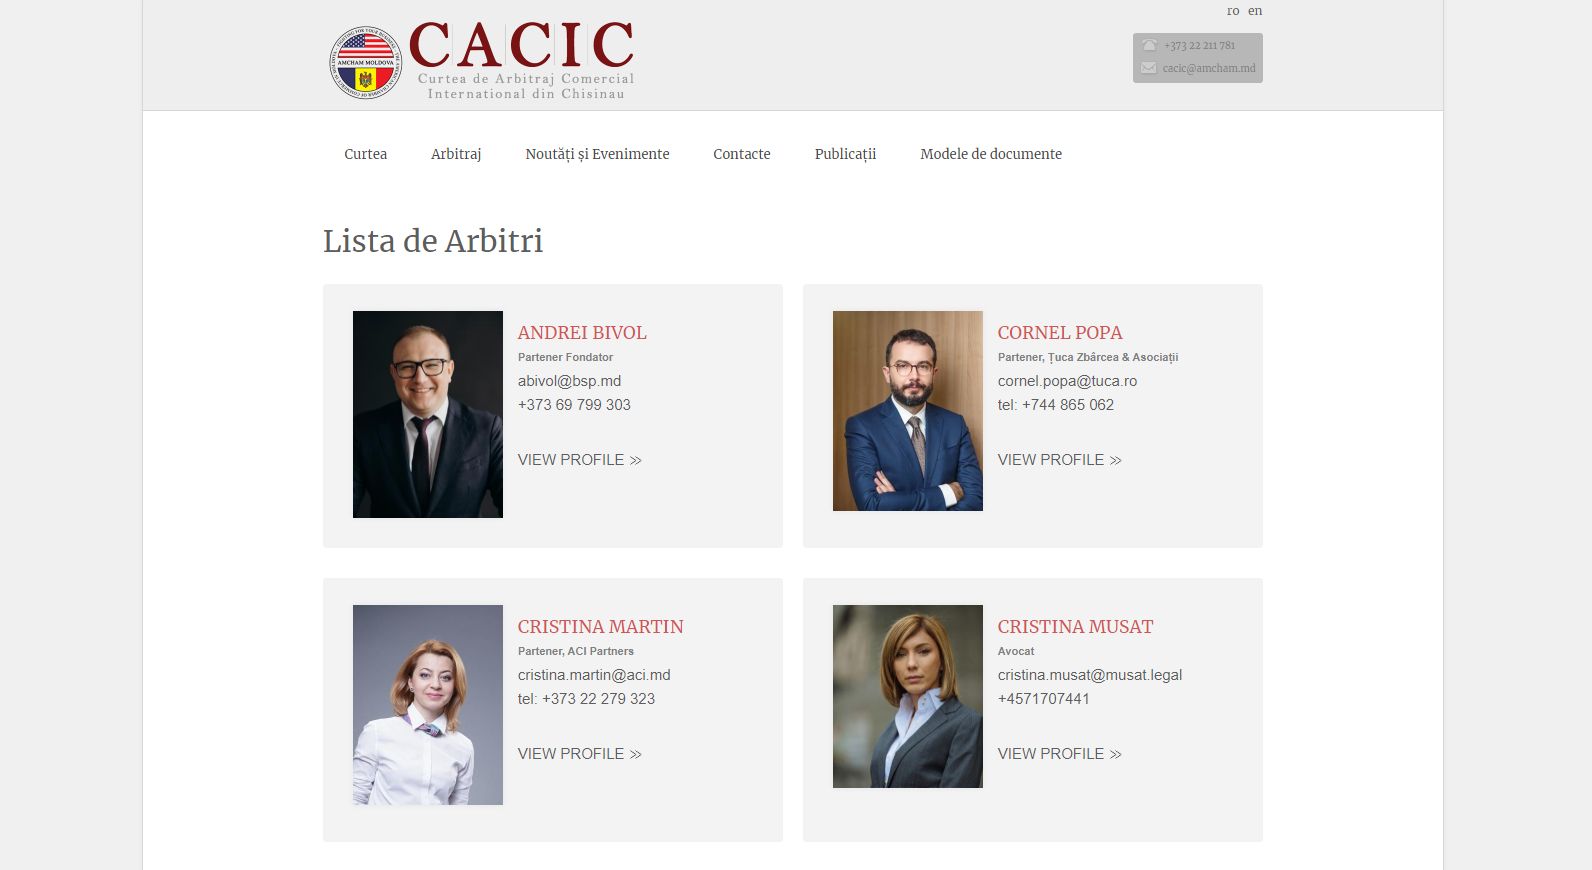 CACIC website Image